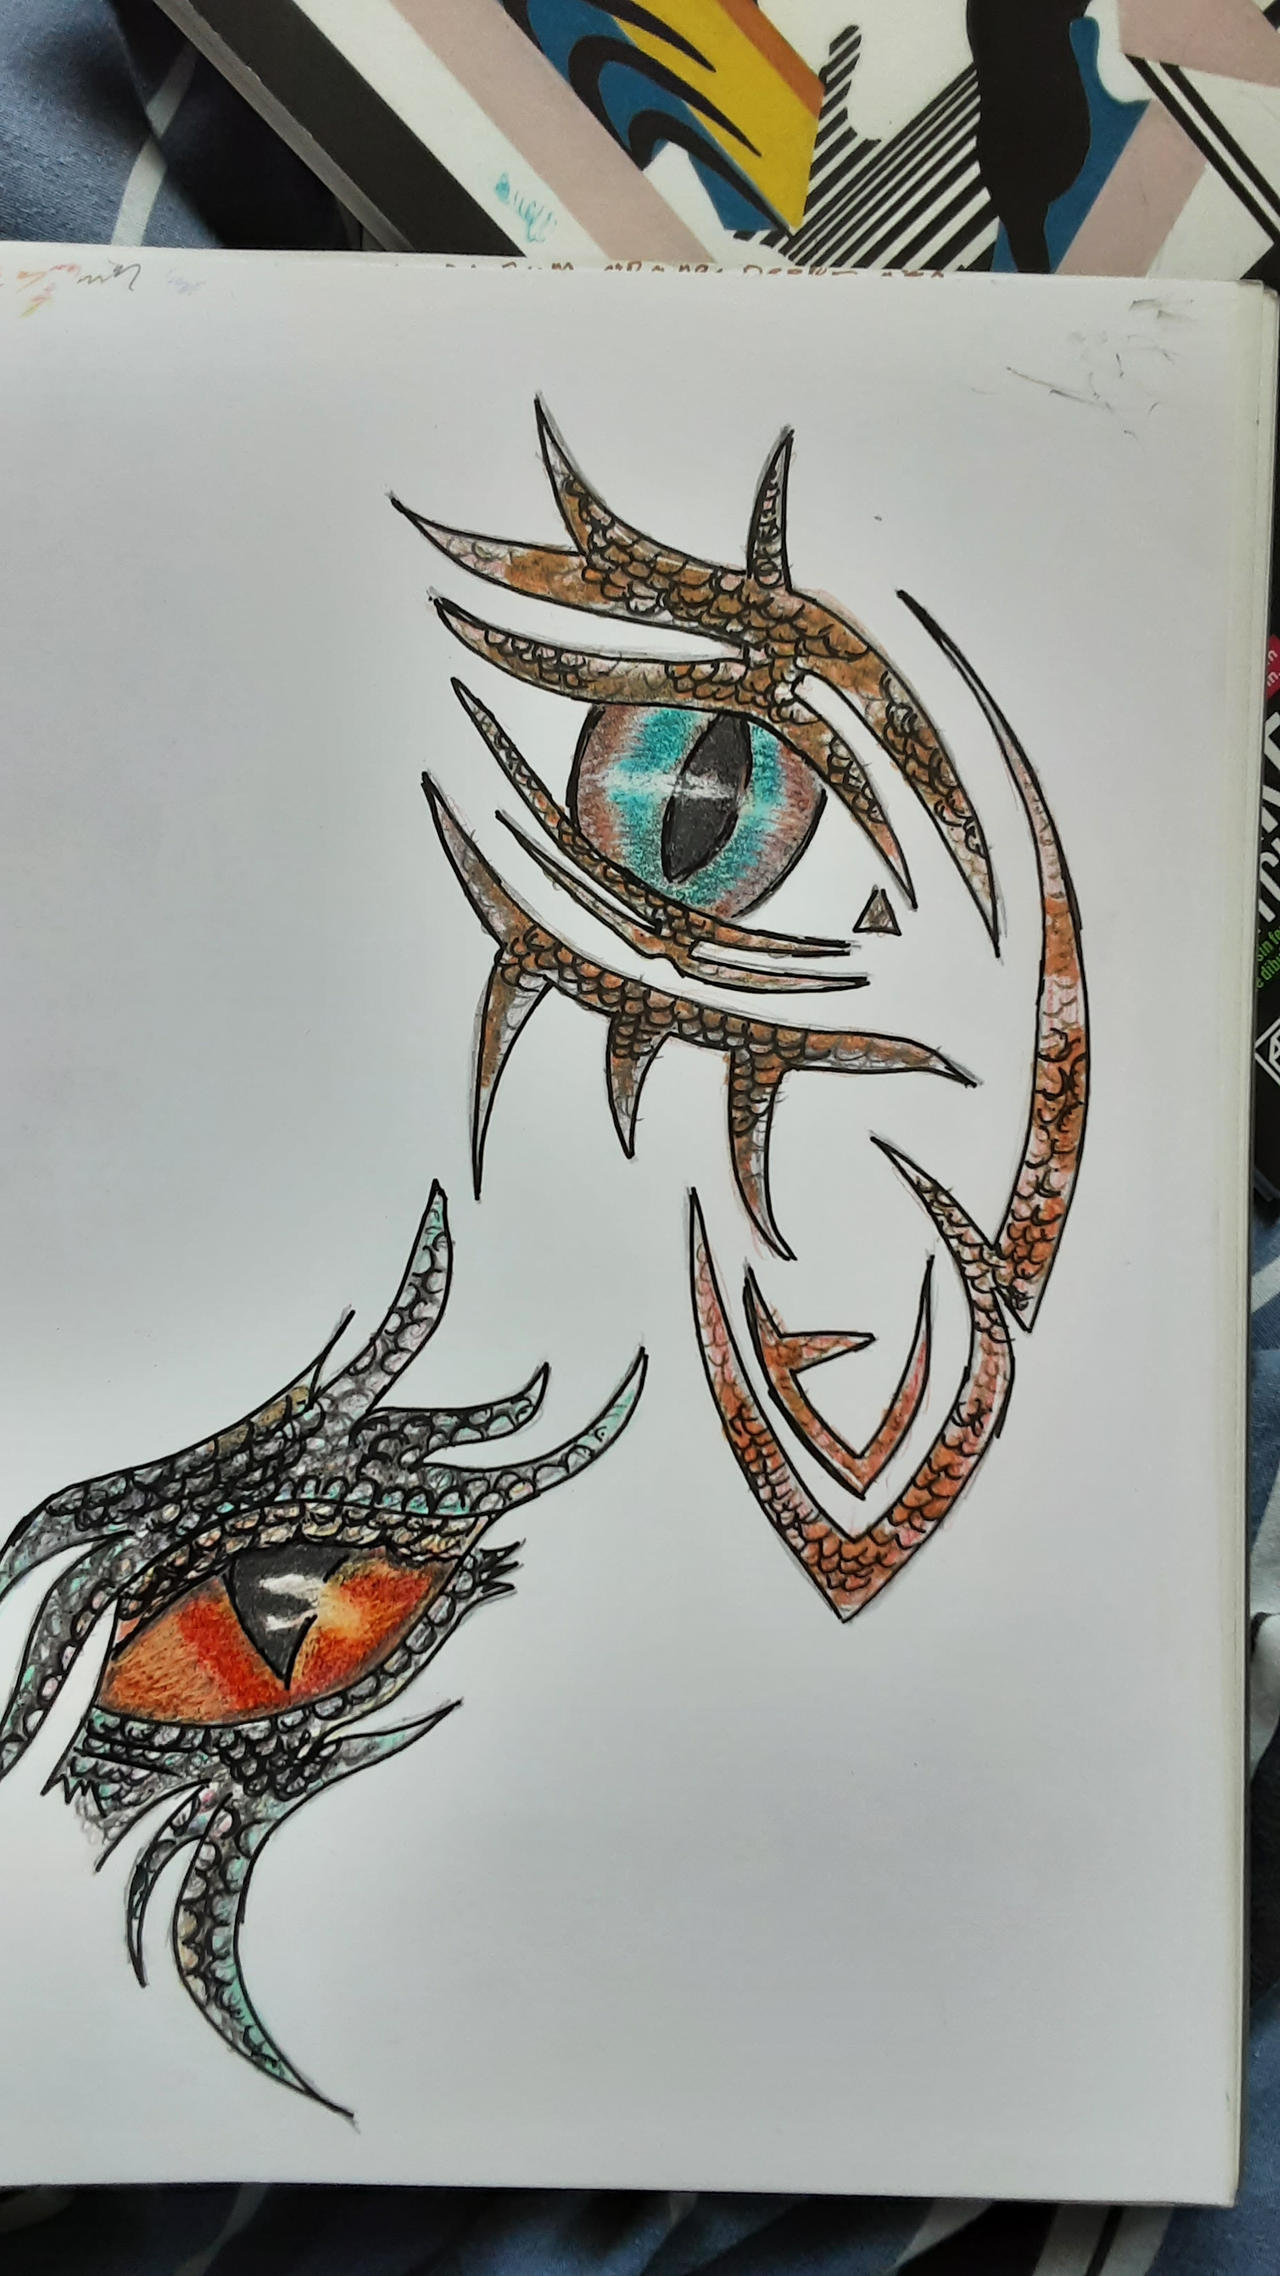 Dragon's Eye by christoskarapanos on DeviantArt  Dragon artwork, Dragon eye  drawing, Dragon eye